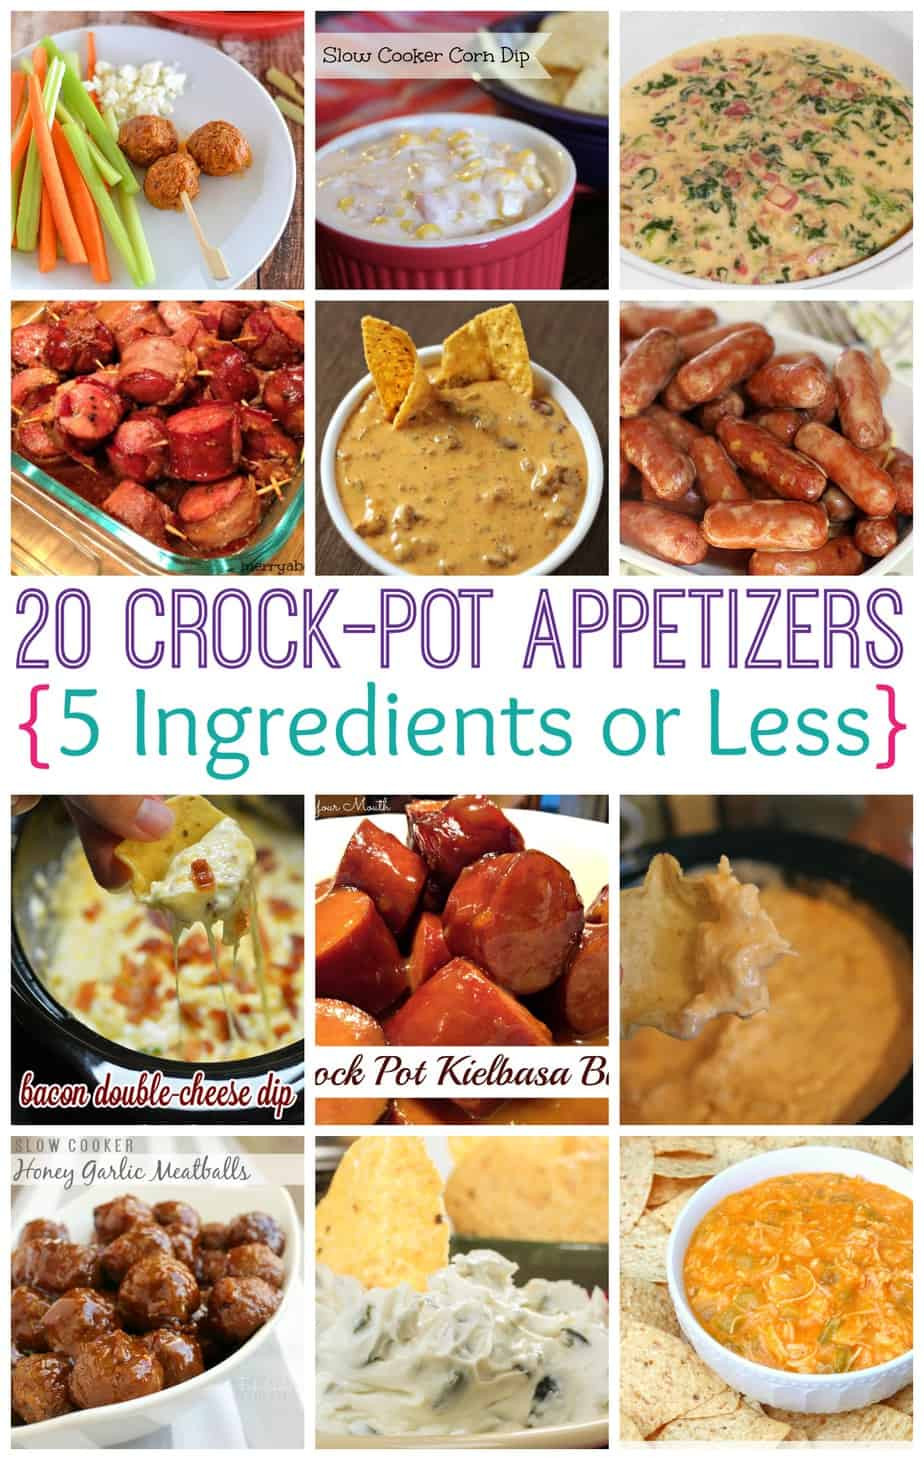 14 Easy Slow Cooker Appetizers
 Crock Pot Appetizers